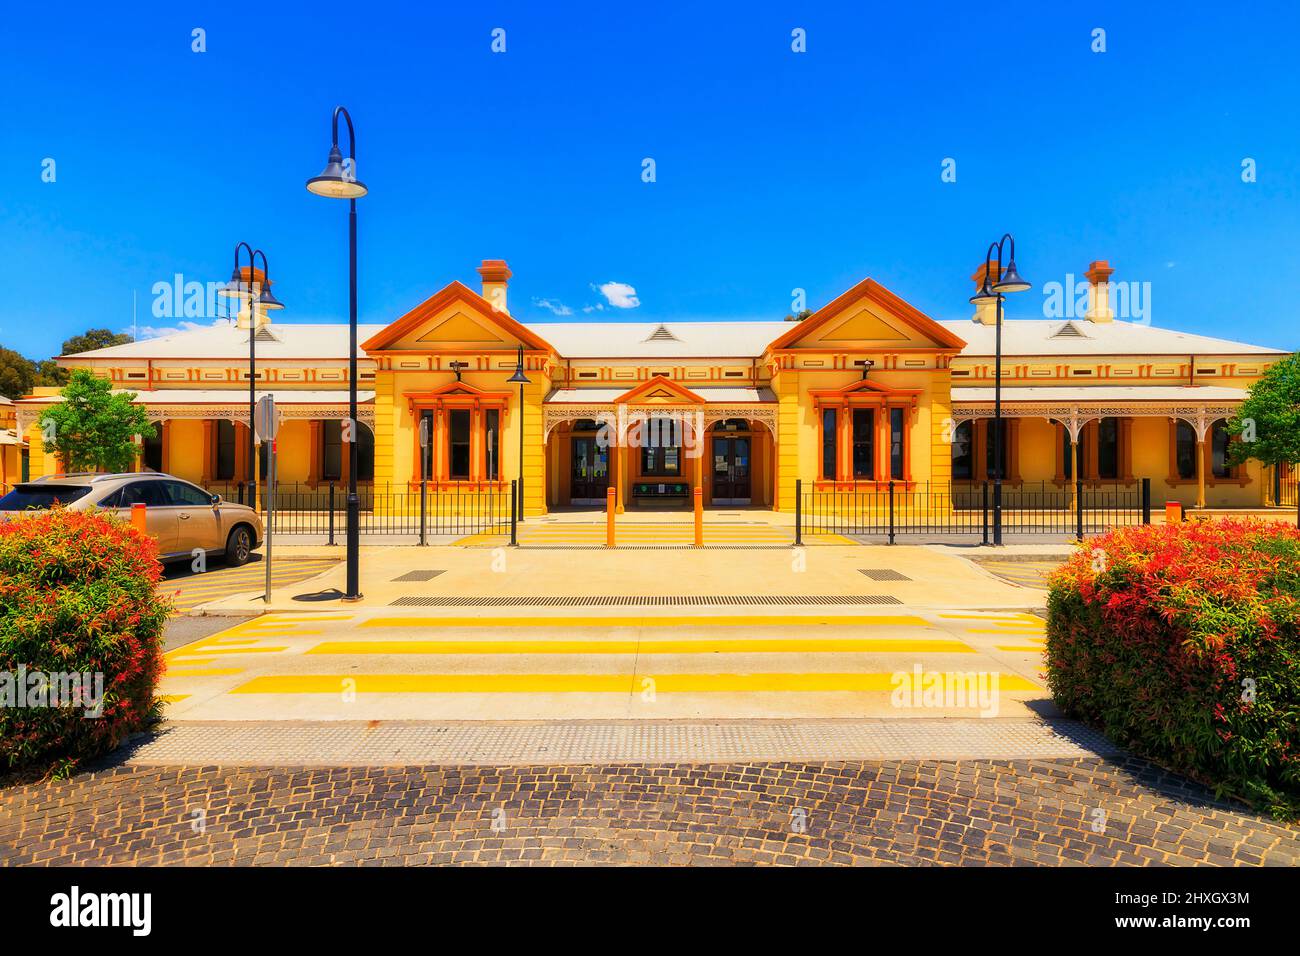 Historic heritage facade of train station in Wagga Wagga city of regional Australia. Stock Photo